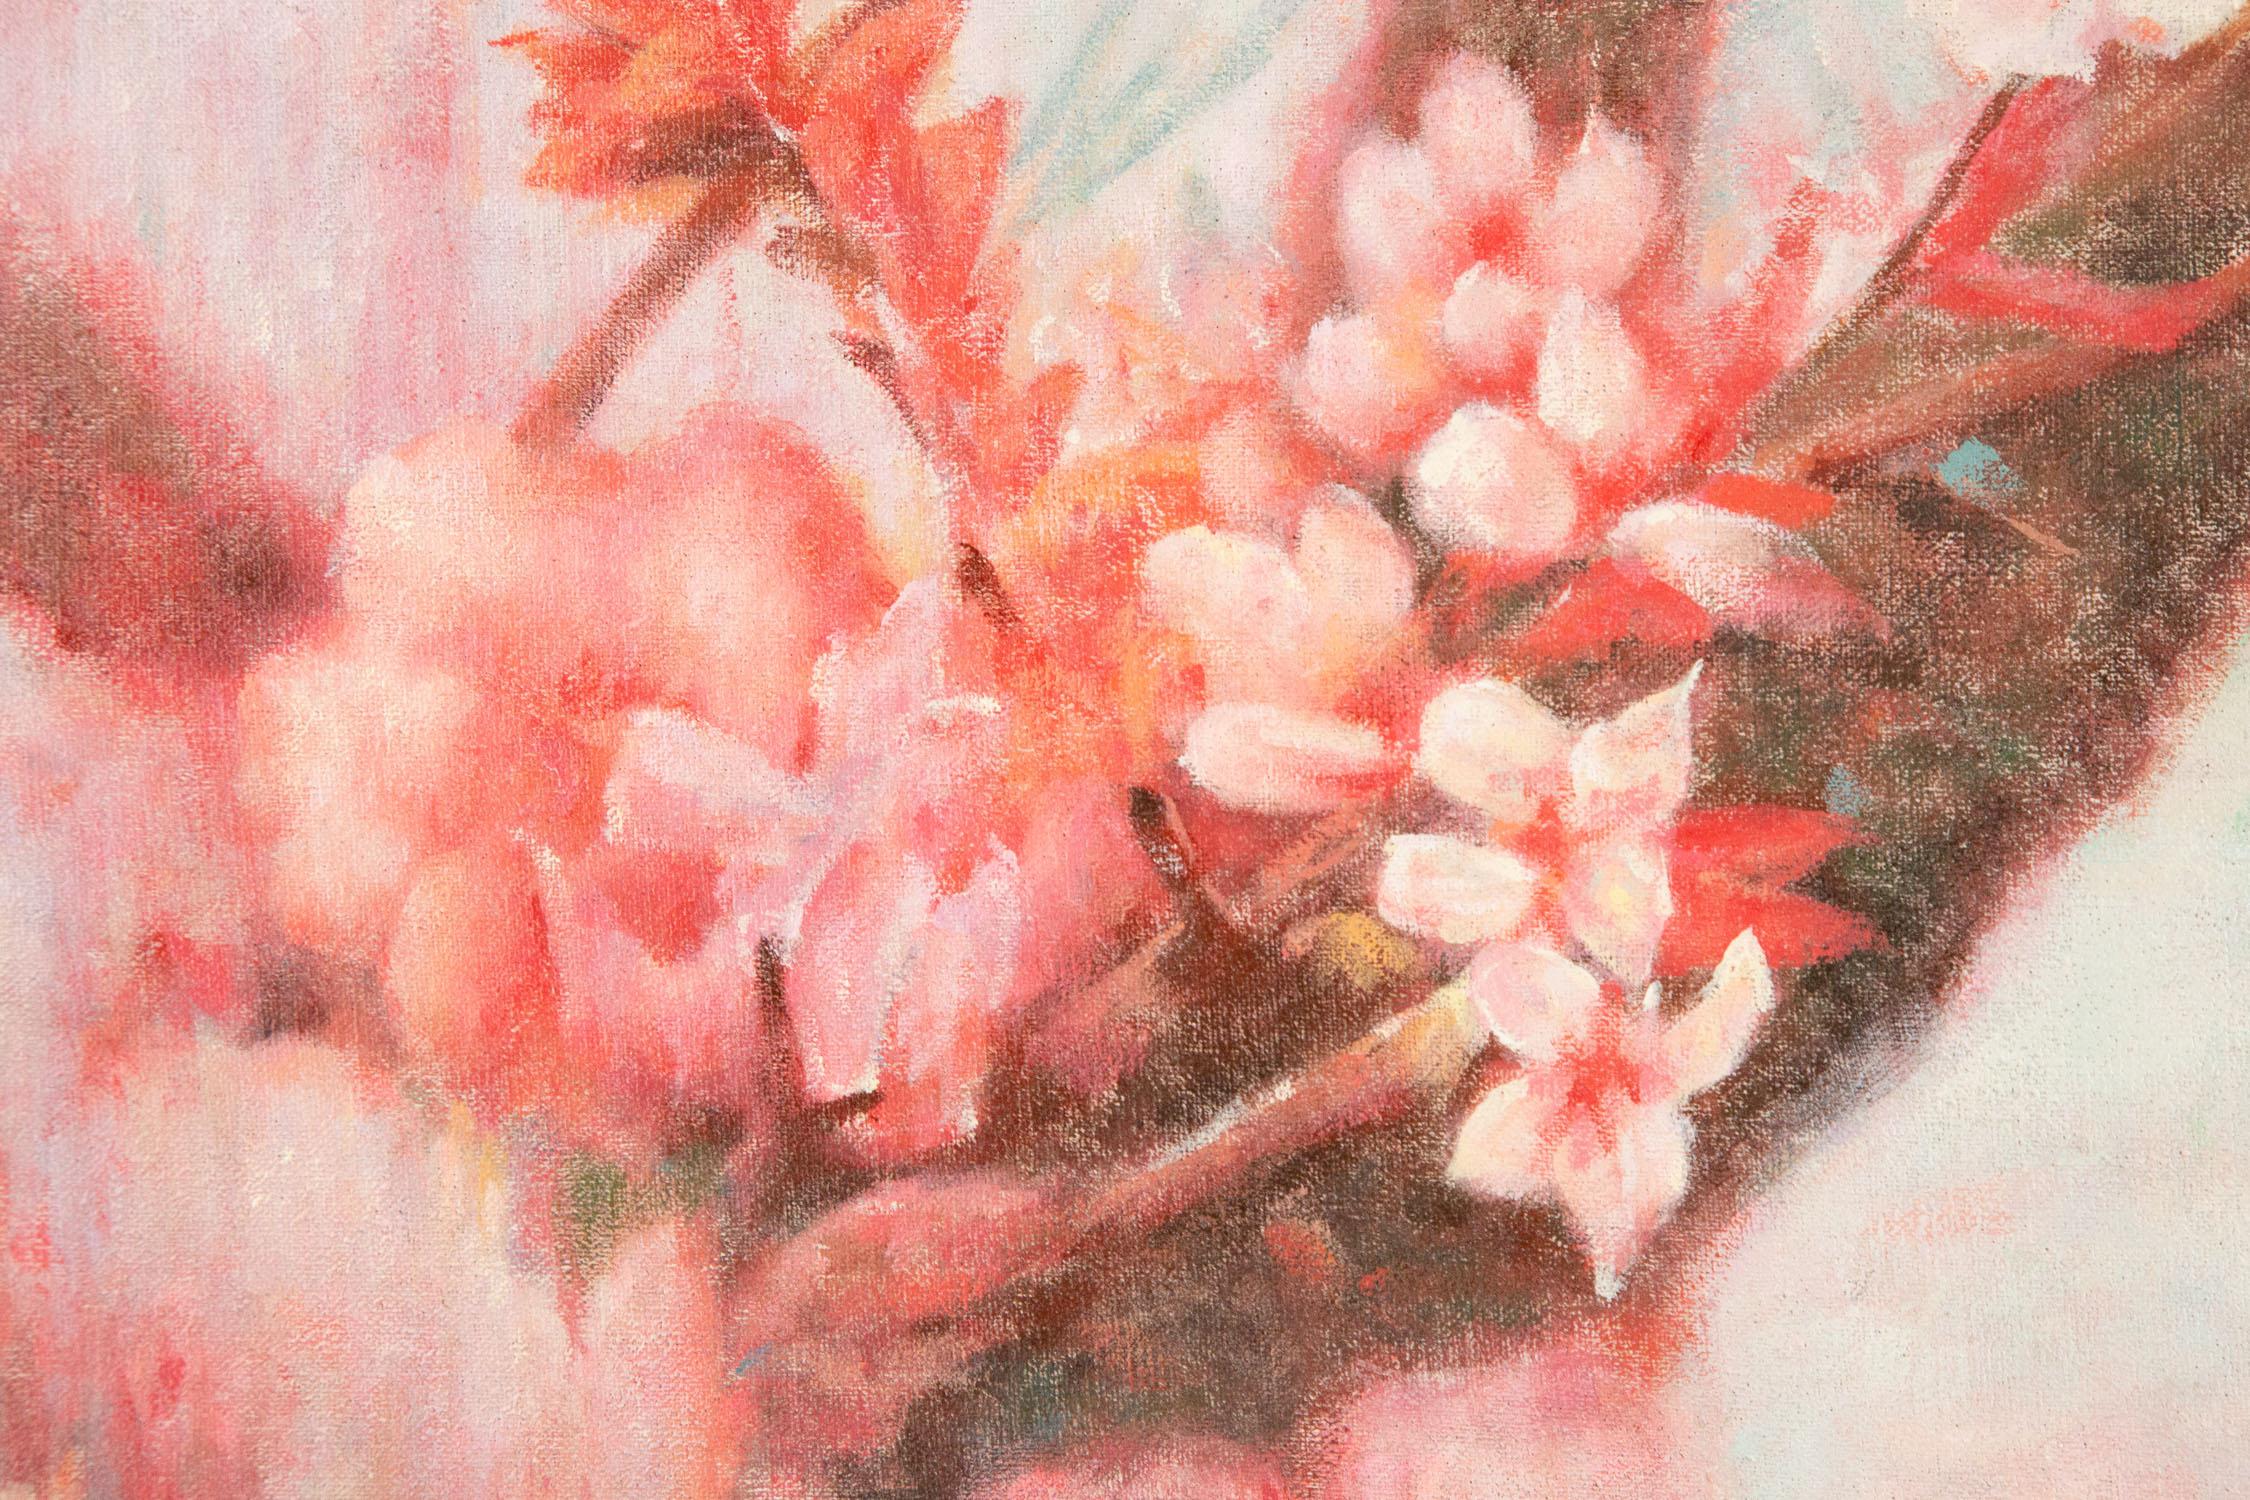 ShouZhang Wang Floral Original Oil On Canvas 